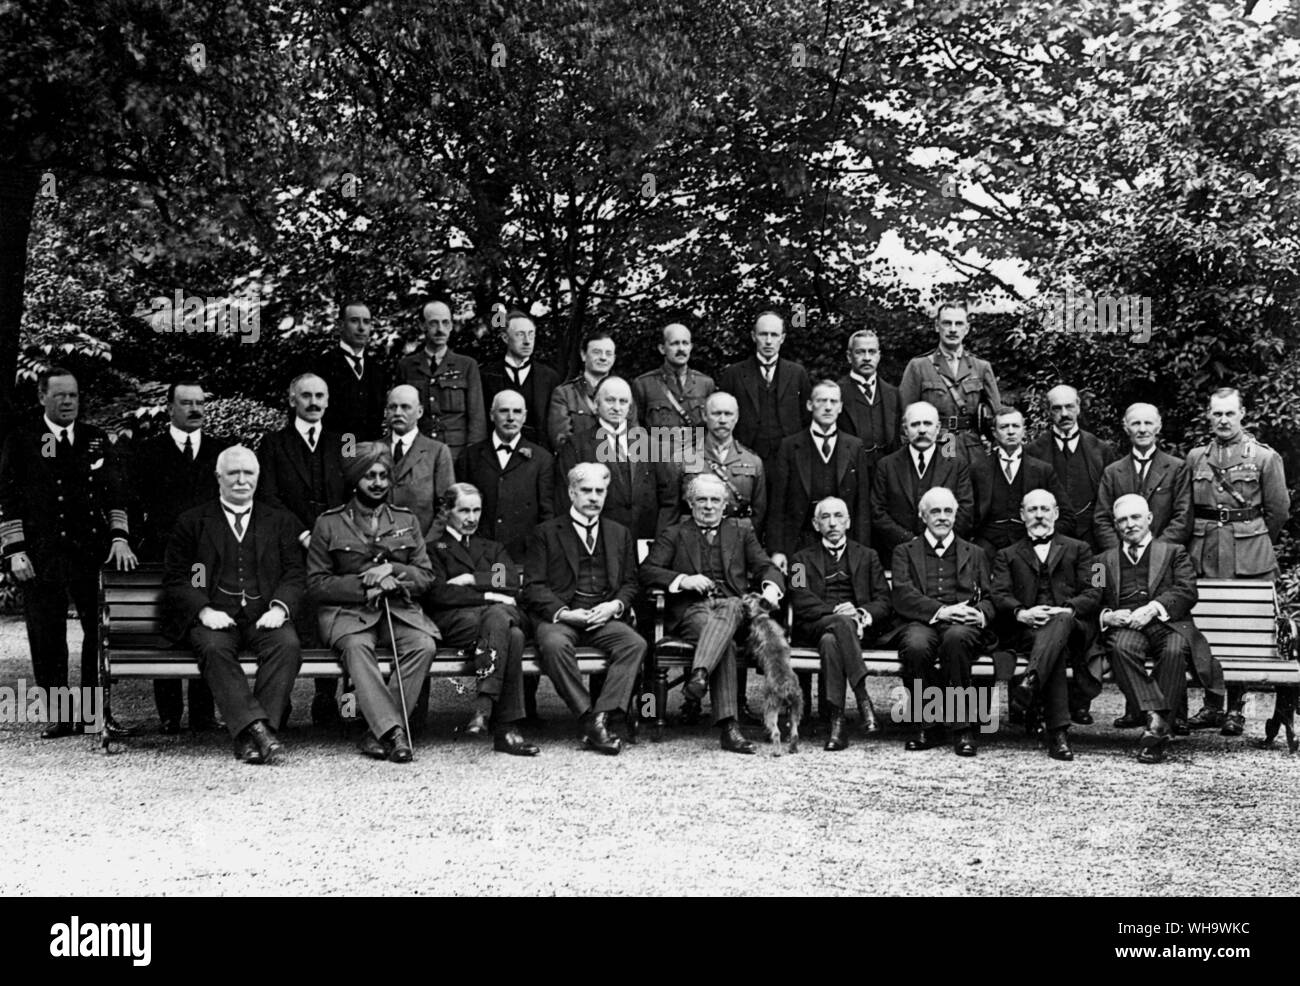 WW1/ Imperial War Cabinet, Downing Street, 1918:. Top, l-r: Sir W. Weir; Gen. Sykes; Col. G. Lambert; Col. Amery; Lt. Col. Sir Maurice Hankey; The Hon. A. Meighen; Sir S.P. Sinha; Col. Storr.. Middle row, l-r: Sir Rosslyn Wemyss; Sir Joseph Ward; The Hon. M.W. Rowell; Mr Walter Long; Mr G.N. Barnes; Lord Curzon; Gen. Smuts; Mr Austin Chamberlain; The Hon. J.A. Calder; The Hon. H. Burton; Mr E.S Montagu; Sir Joseph Maclay; Gen. Sir G.M. Macdonah.. Front row, l-r: Mr W.F. Massey; The Maharajah of Patiala; Mr Bonar Law; Sir Robert Borden; Mr David Lloyd George; Mr W.M Hughes; Mr Balfour; Mr Stock Photo